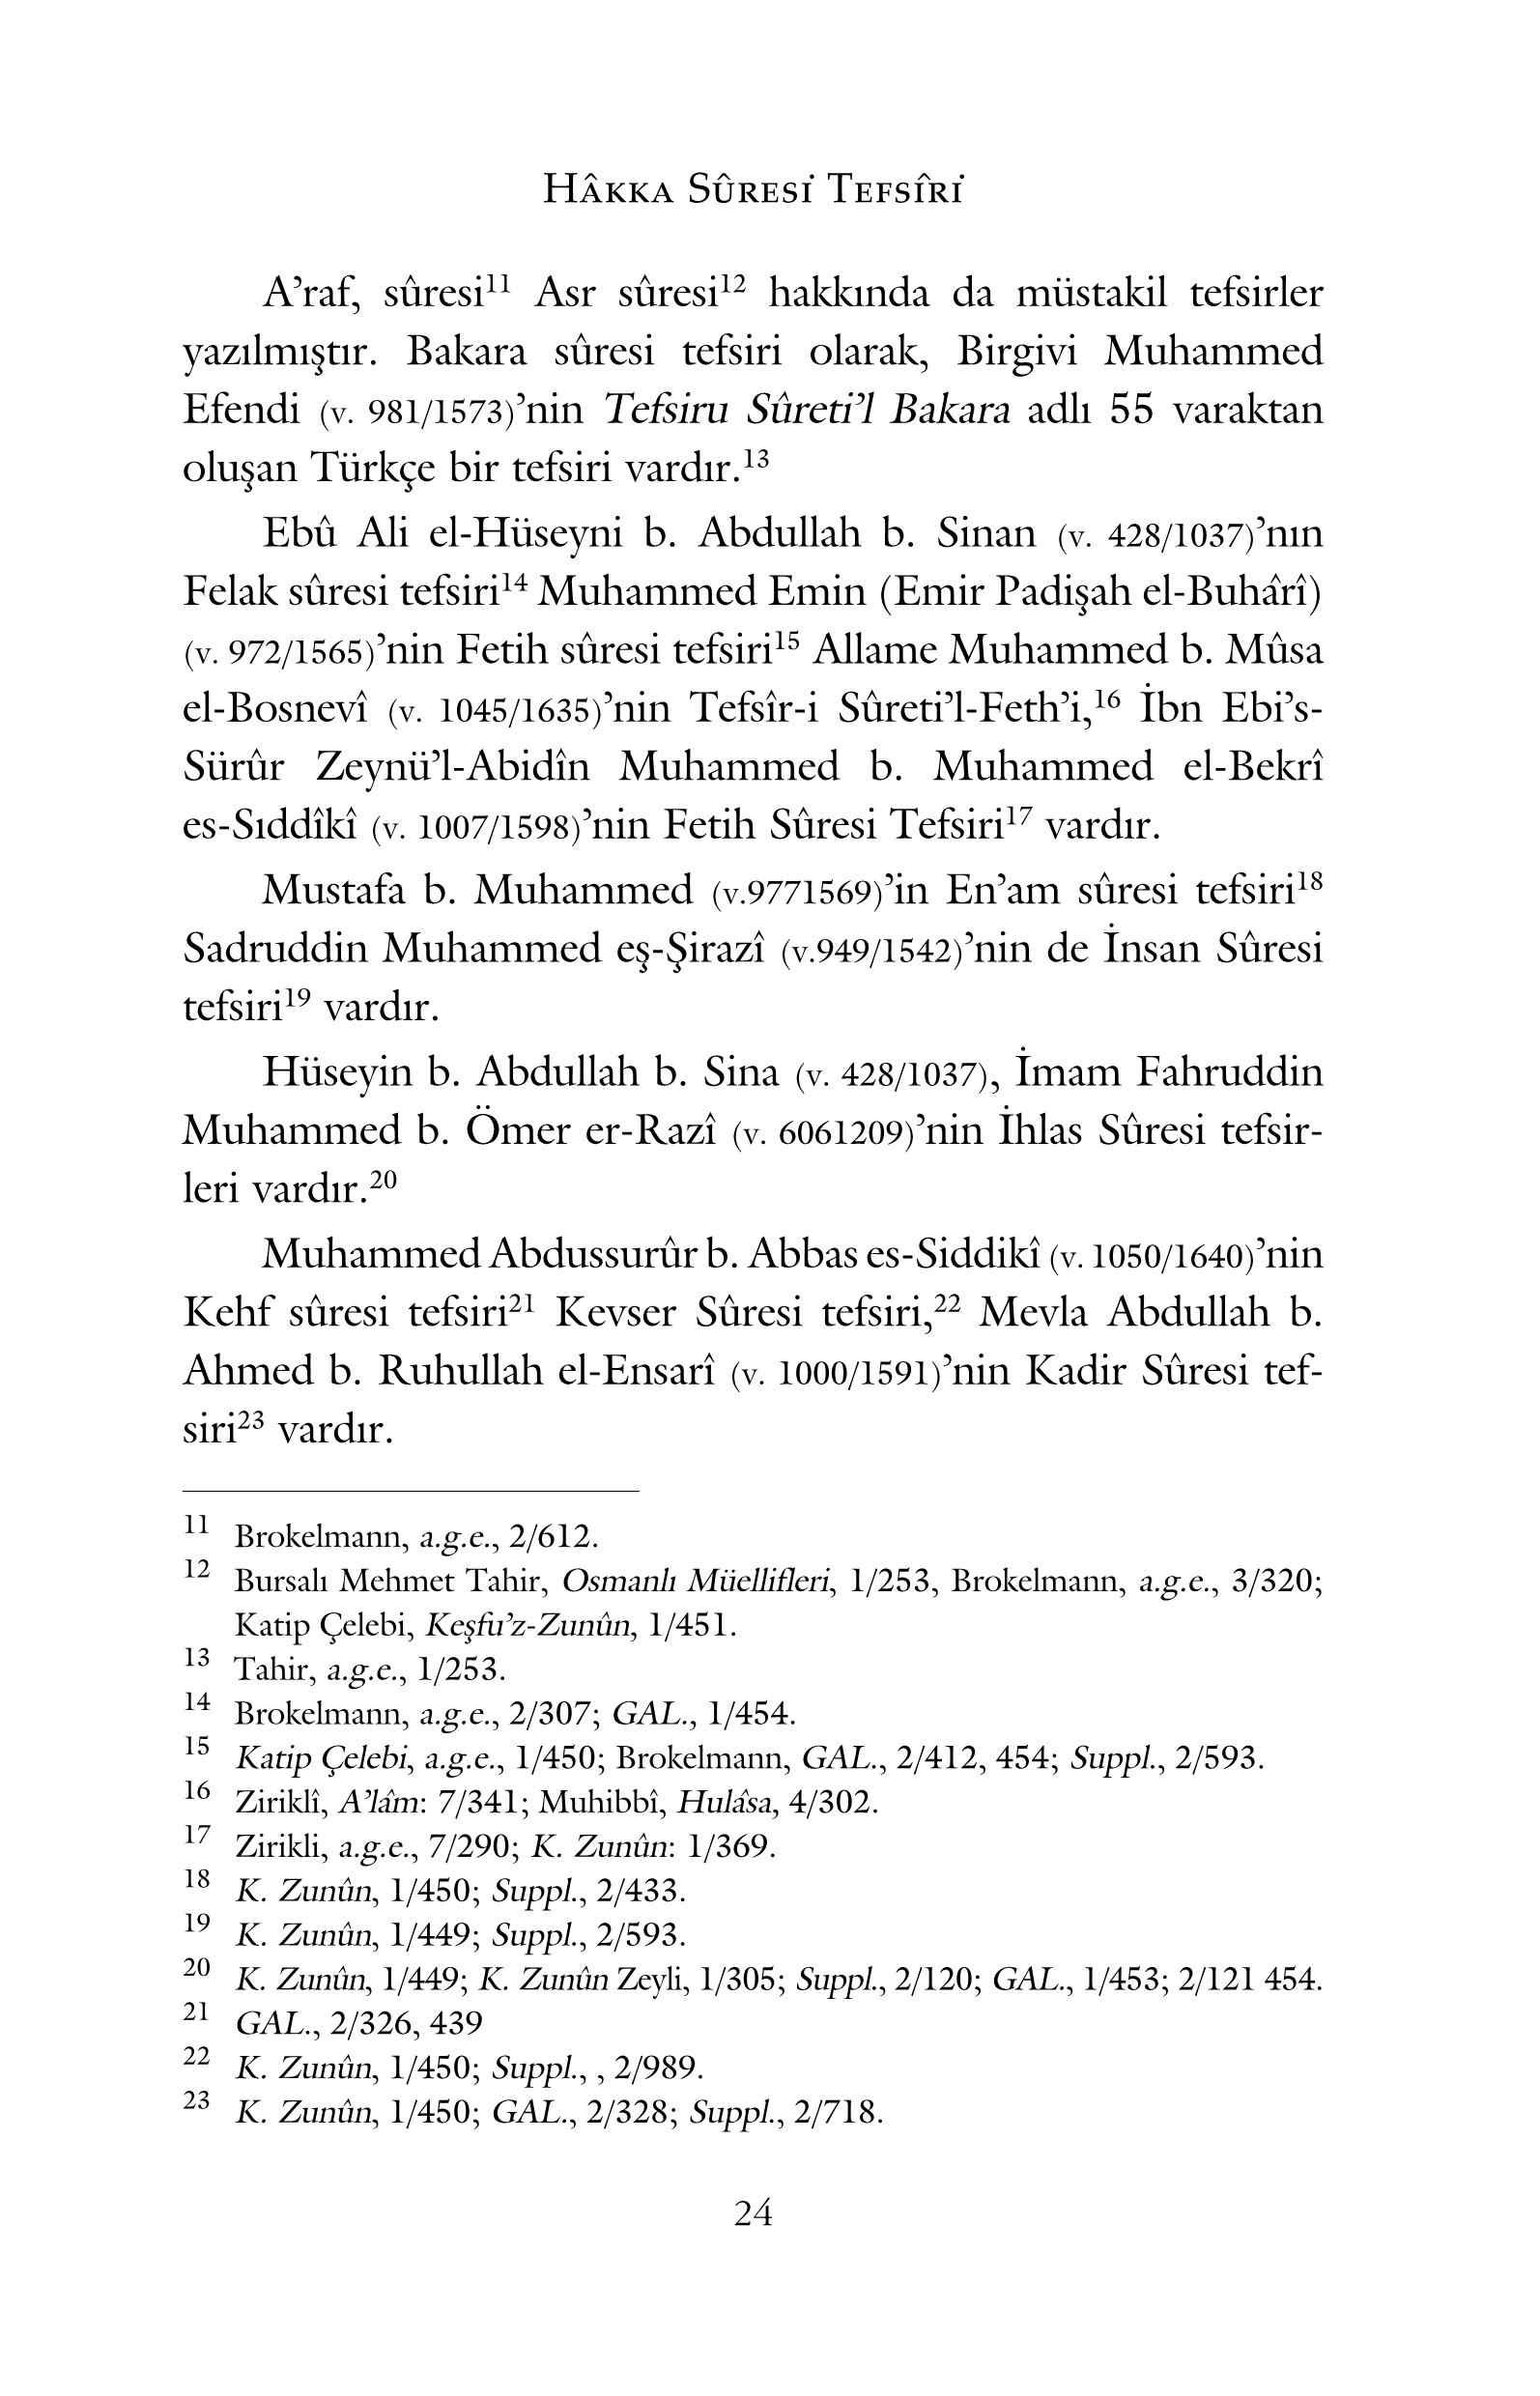 Faruk Tuncer - Sarsici Kiyamet Tasvirleriyle Hakka Suresi Tefsiri - IsikAkademiY.pdf, 174-Sayfa 